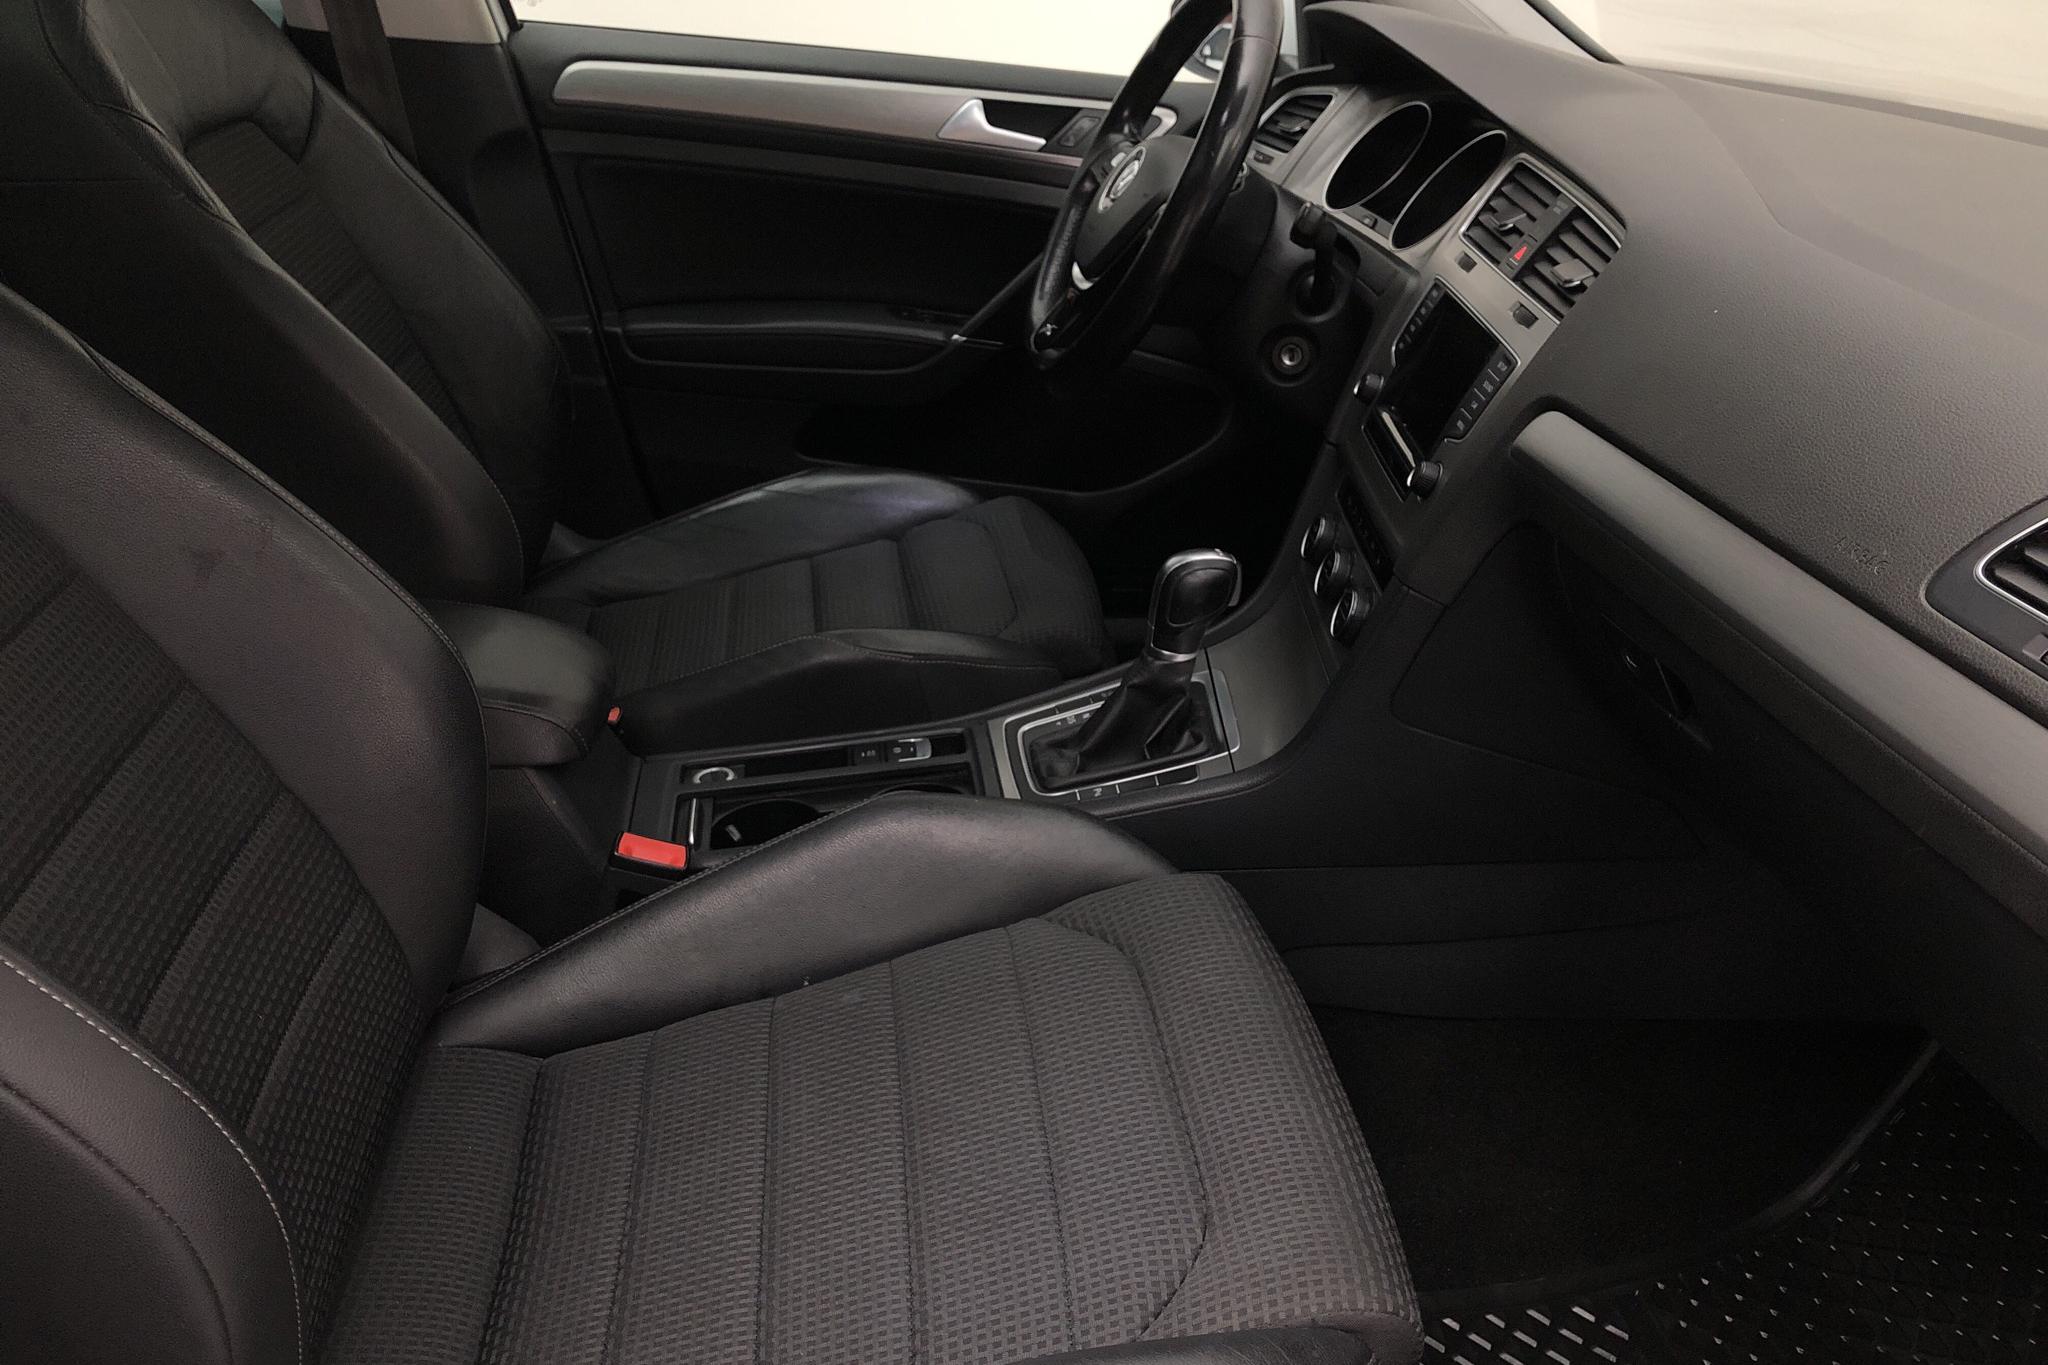 VW Golf VII 1.4 TGI BlueMotion Sportscombi (110hk) - 225 720 km - Automatic - white - 2015